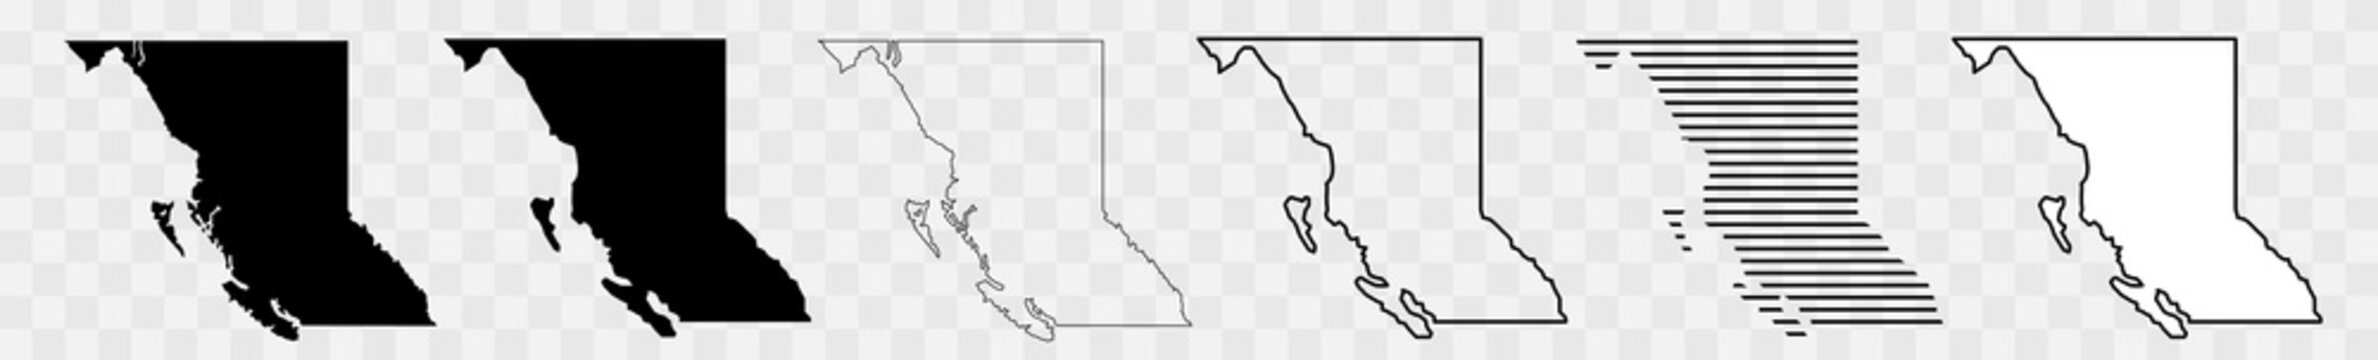 british columbia map black | province border | canada state | canadian | america | transparent isola